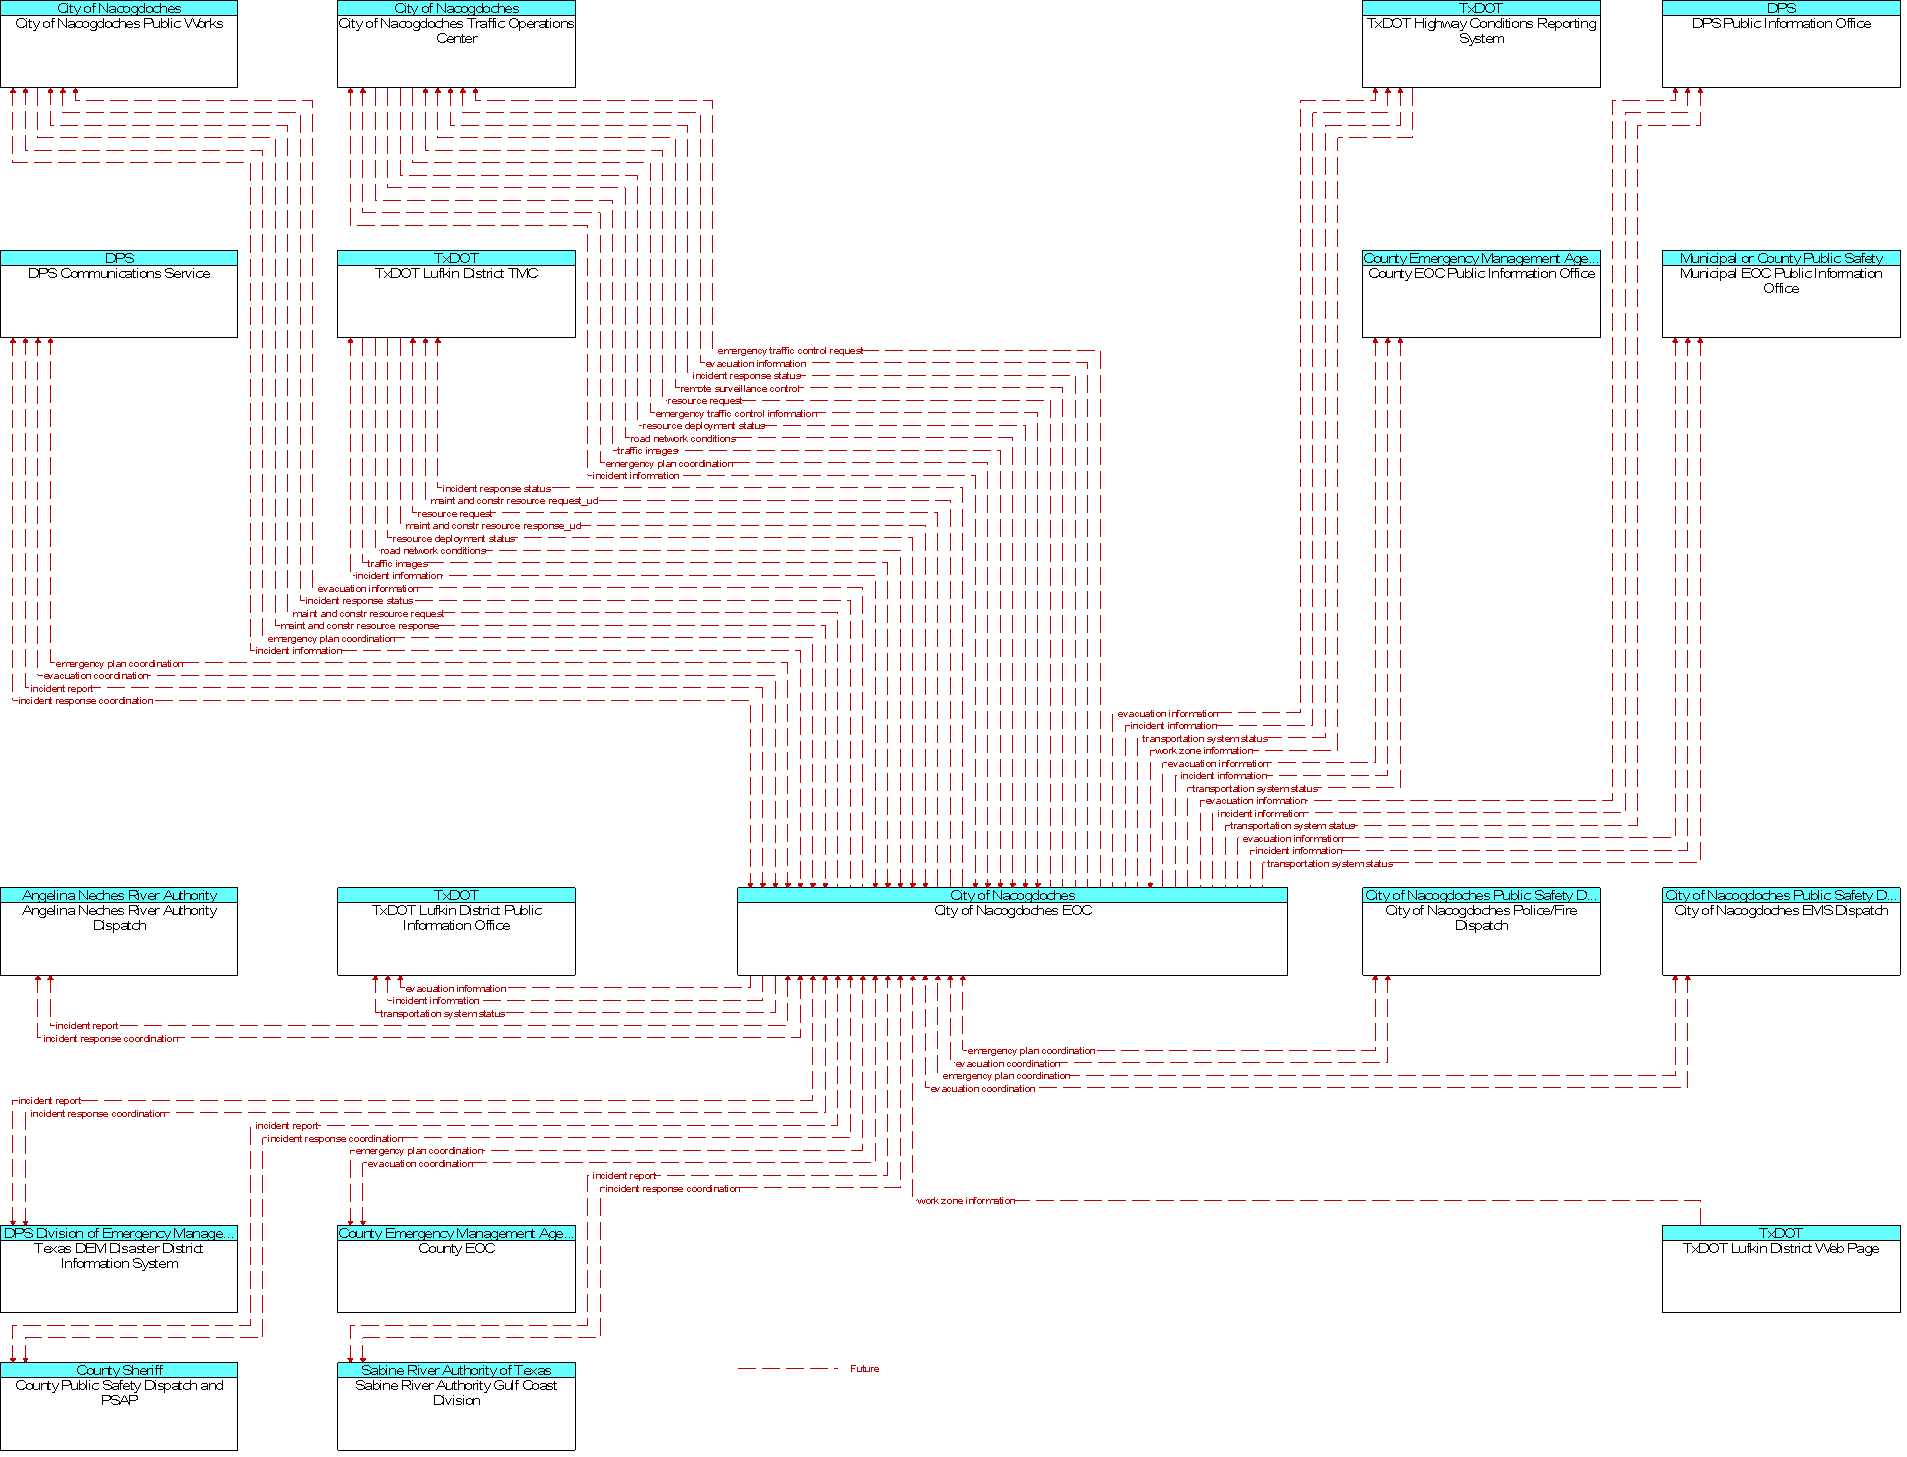 Context Diagram for City of Nacogdoches EOC